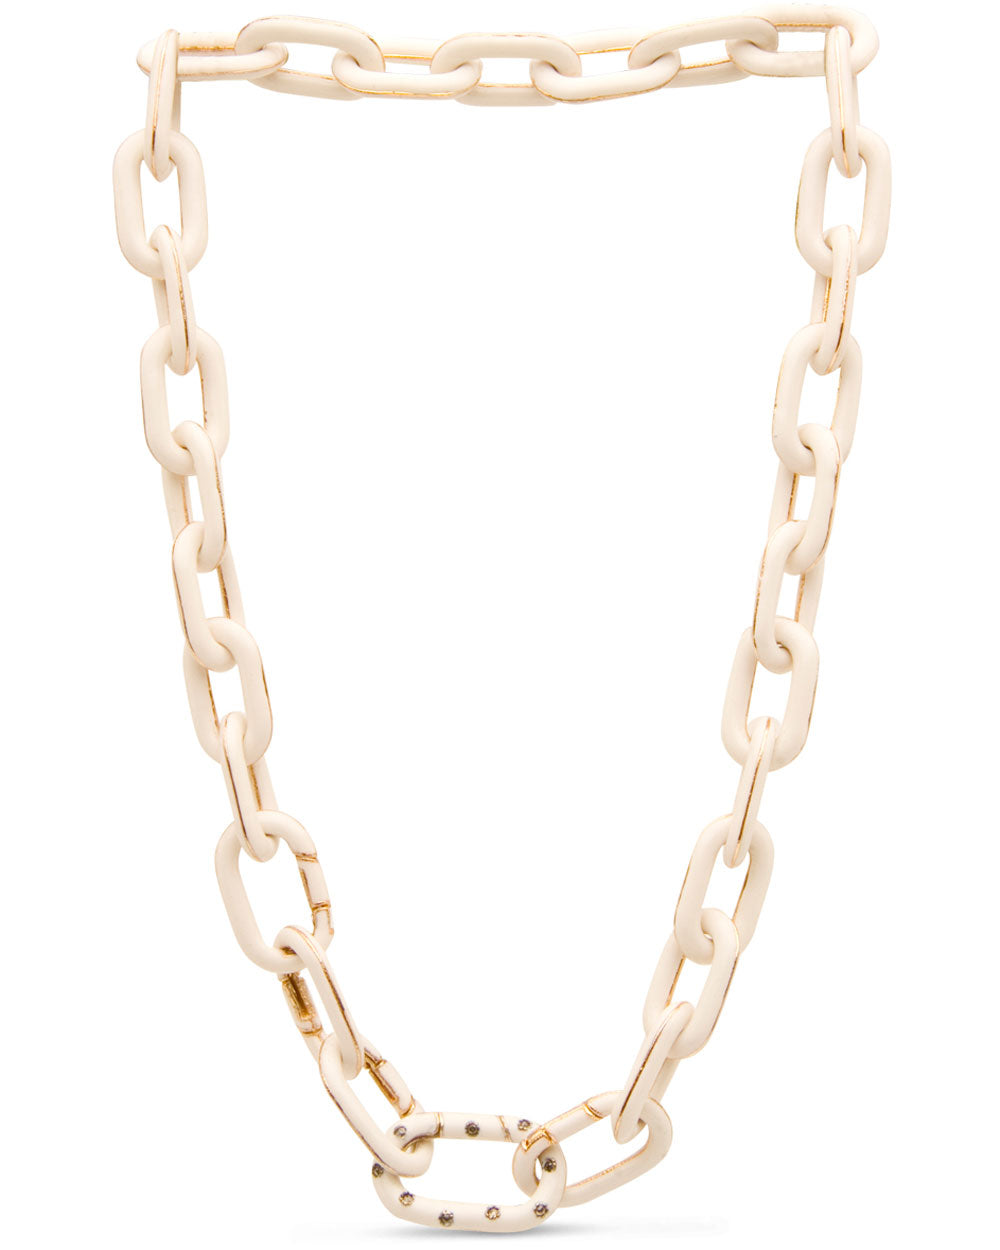 Diamond and White Enamel Chain Necklace